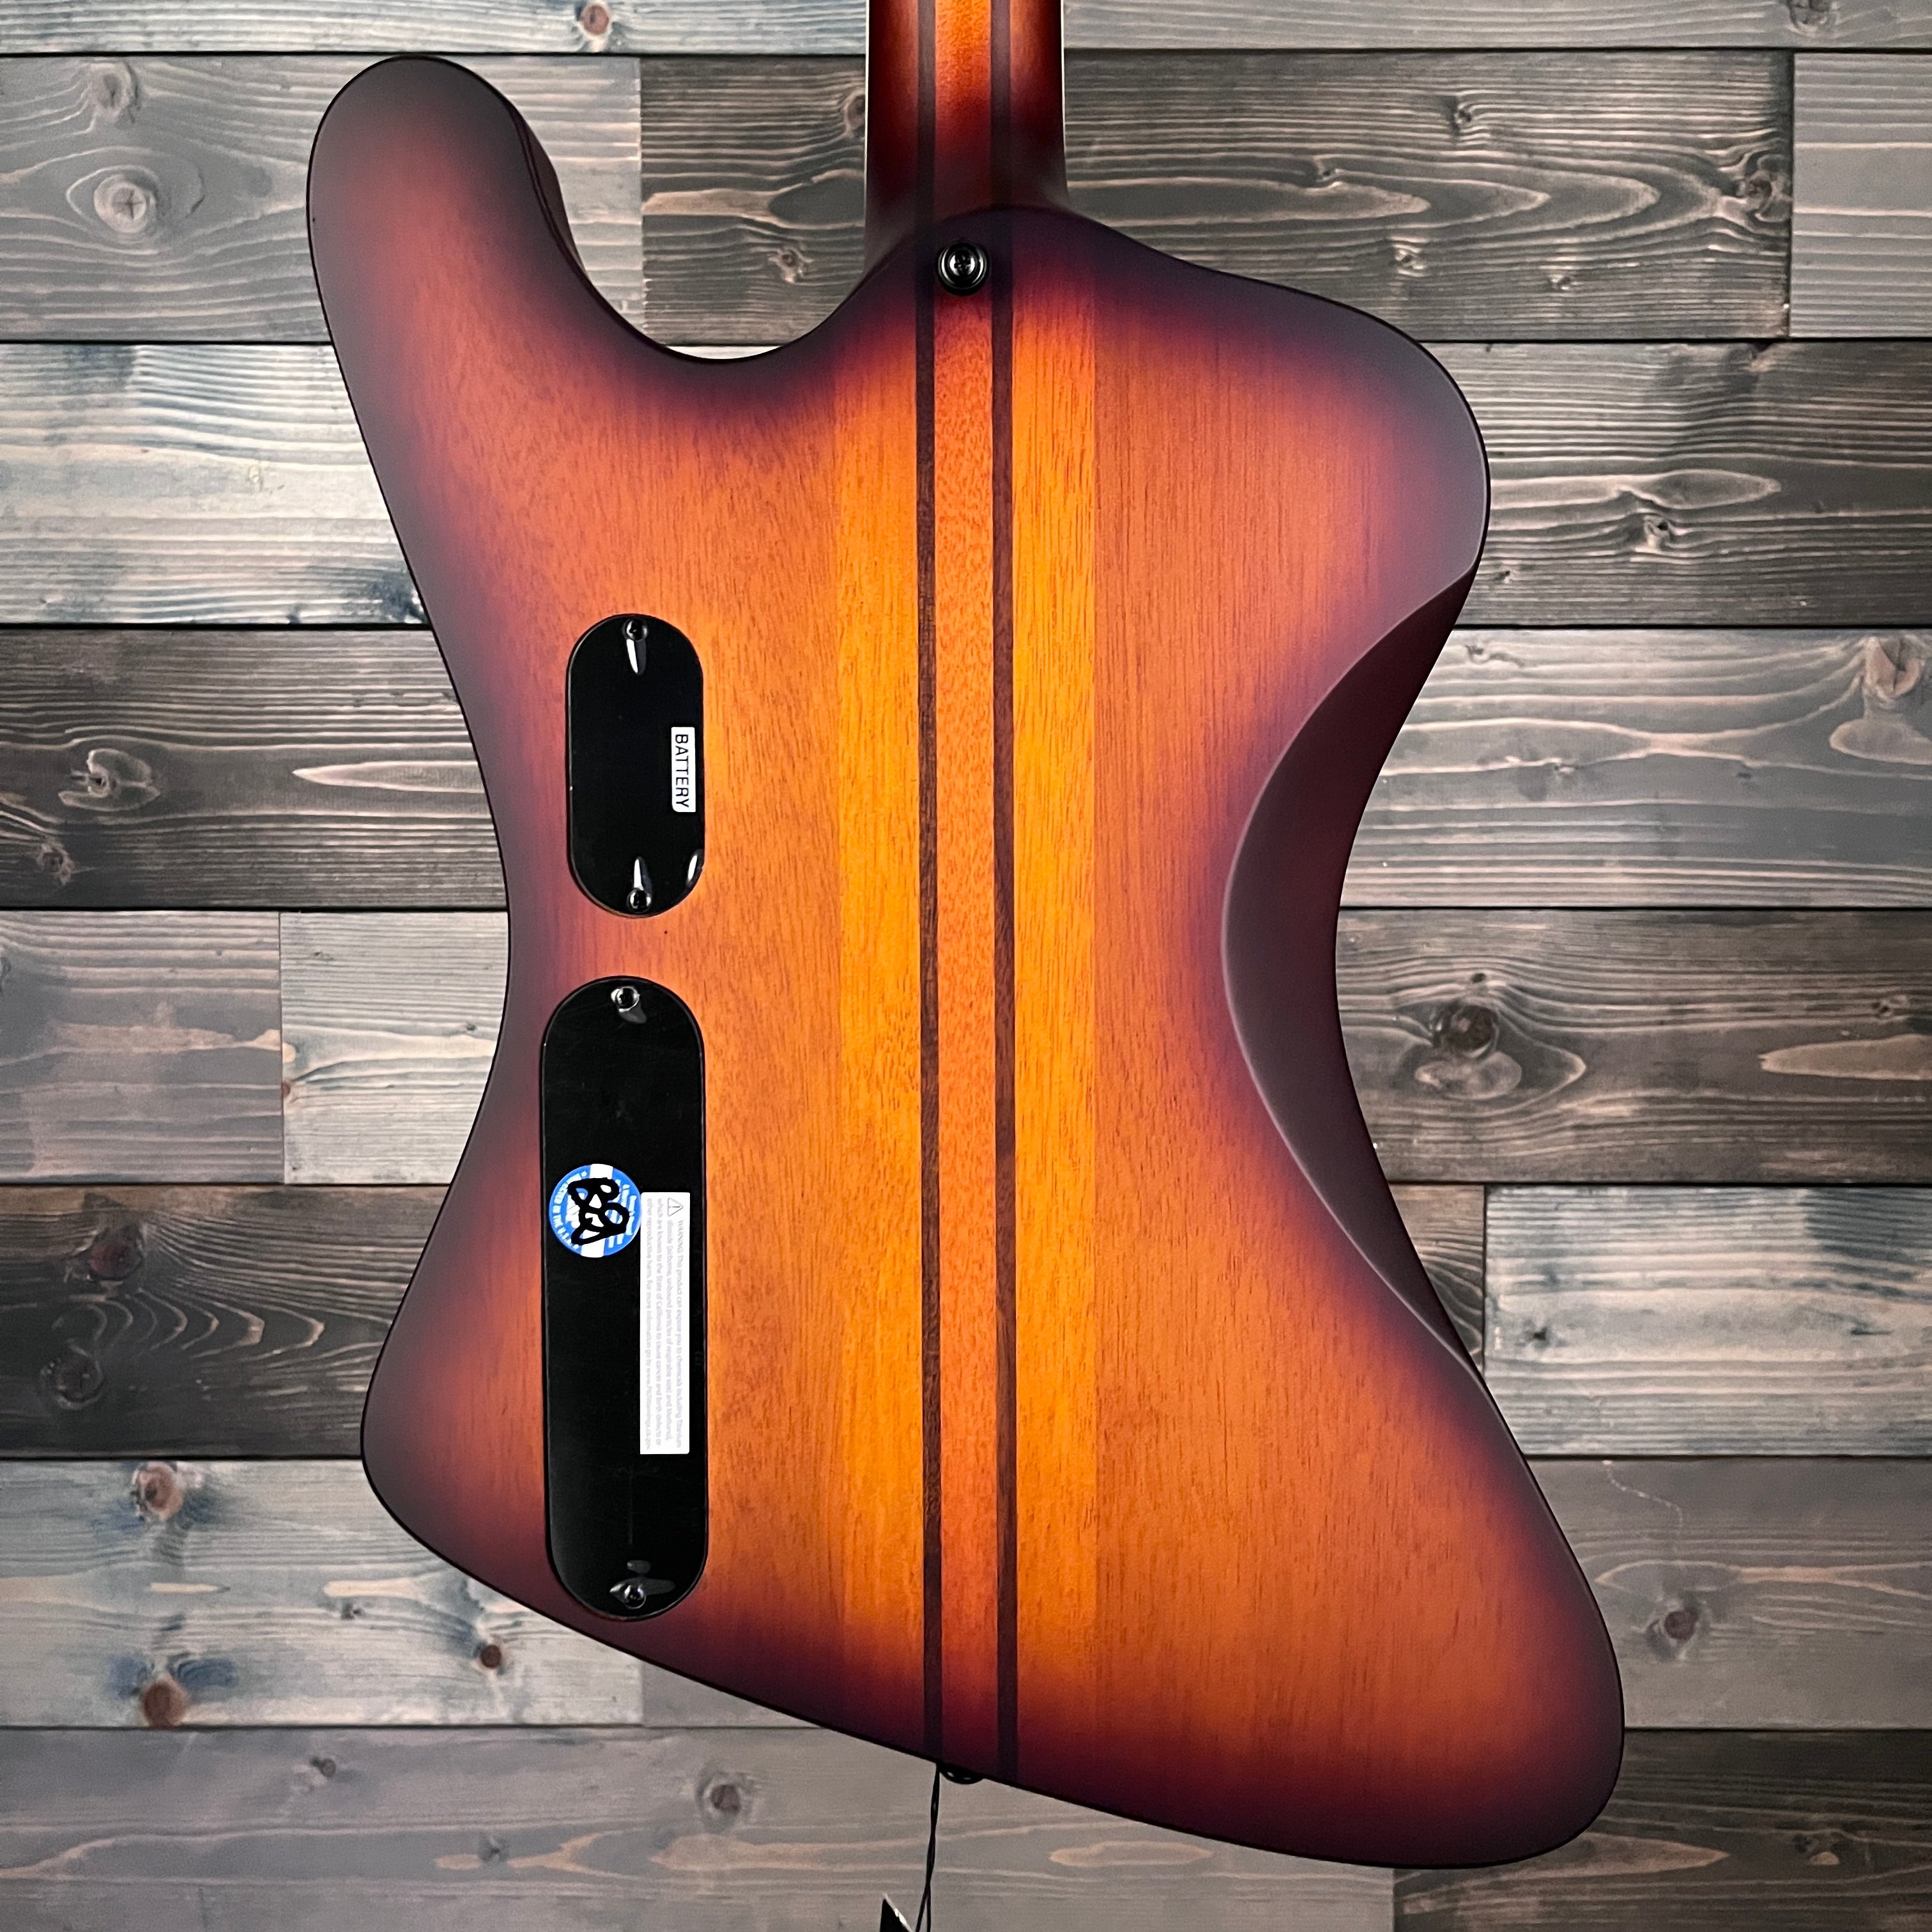 ESP LTD Phoenix-1004 Bass Guitar - Tobacco Sunburst Satin